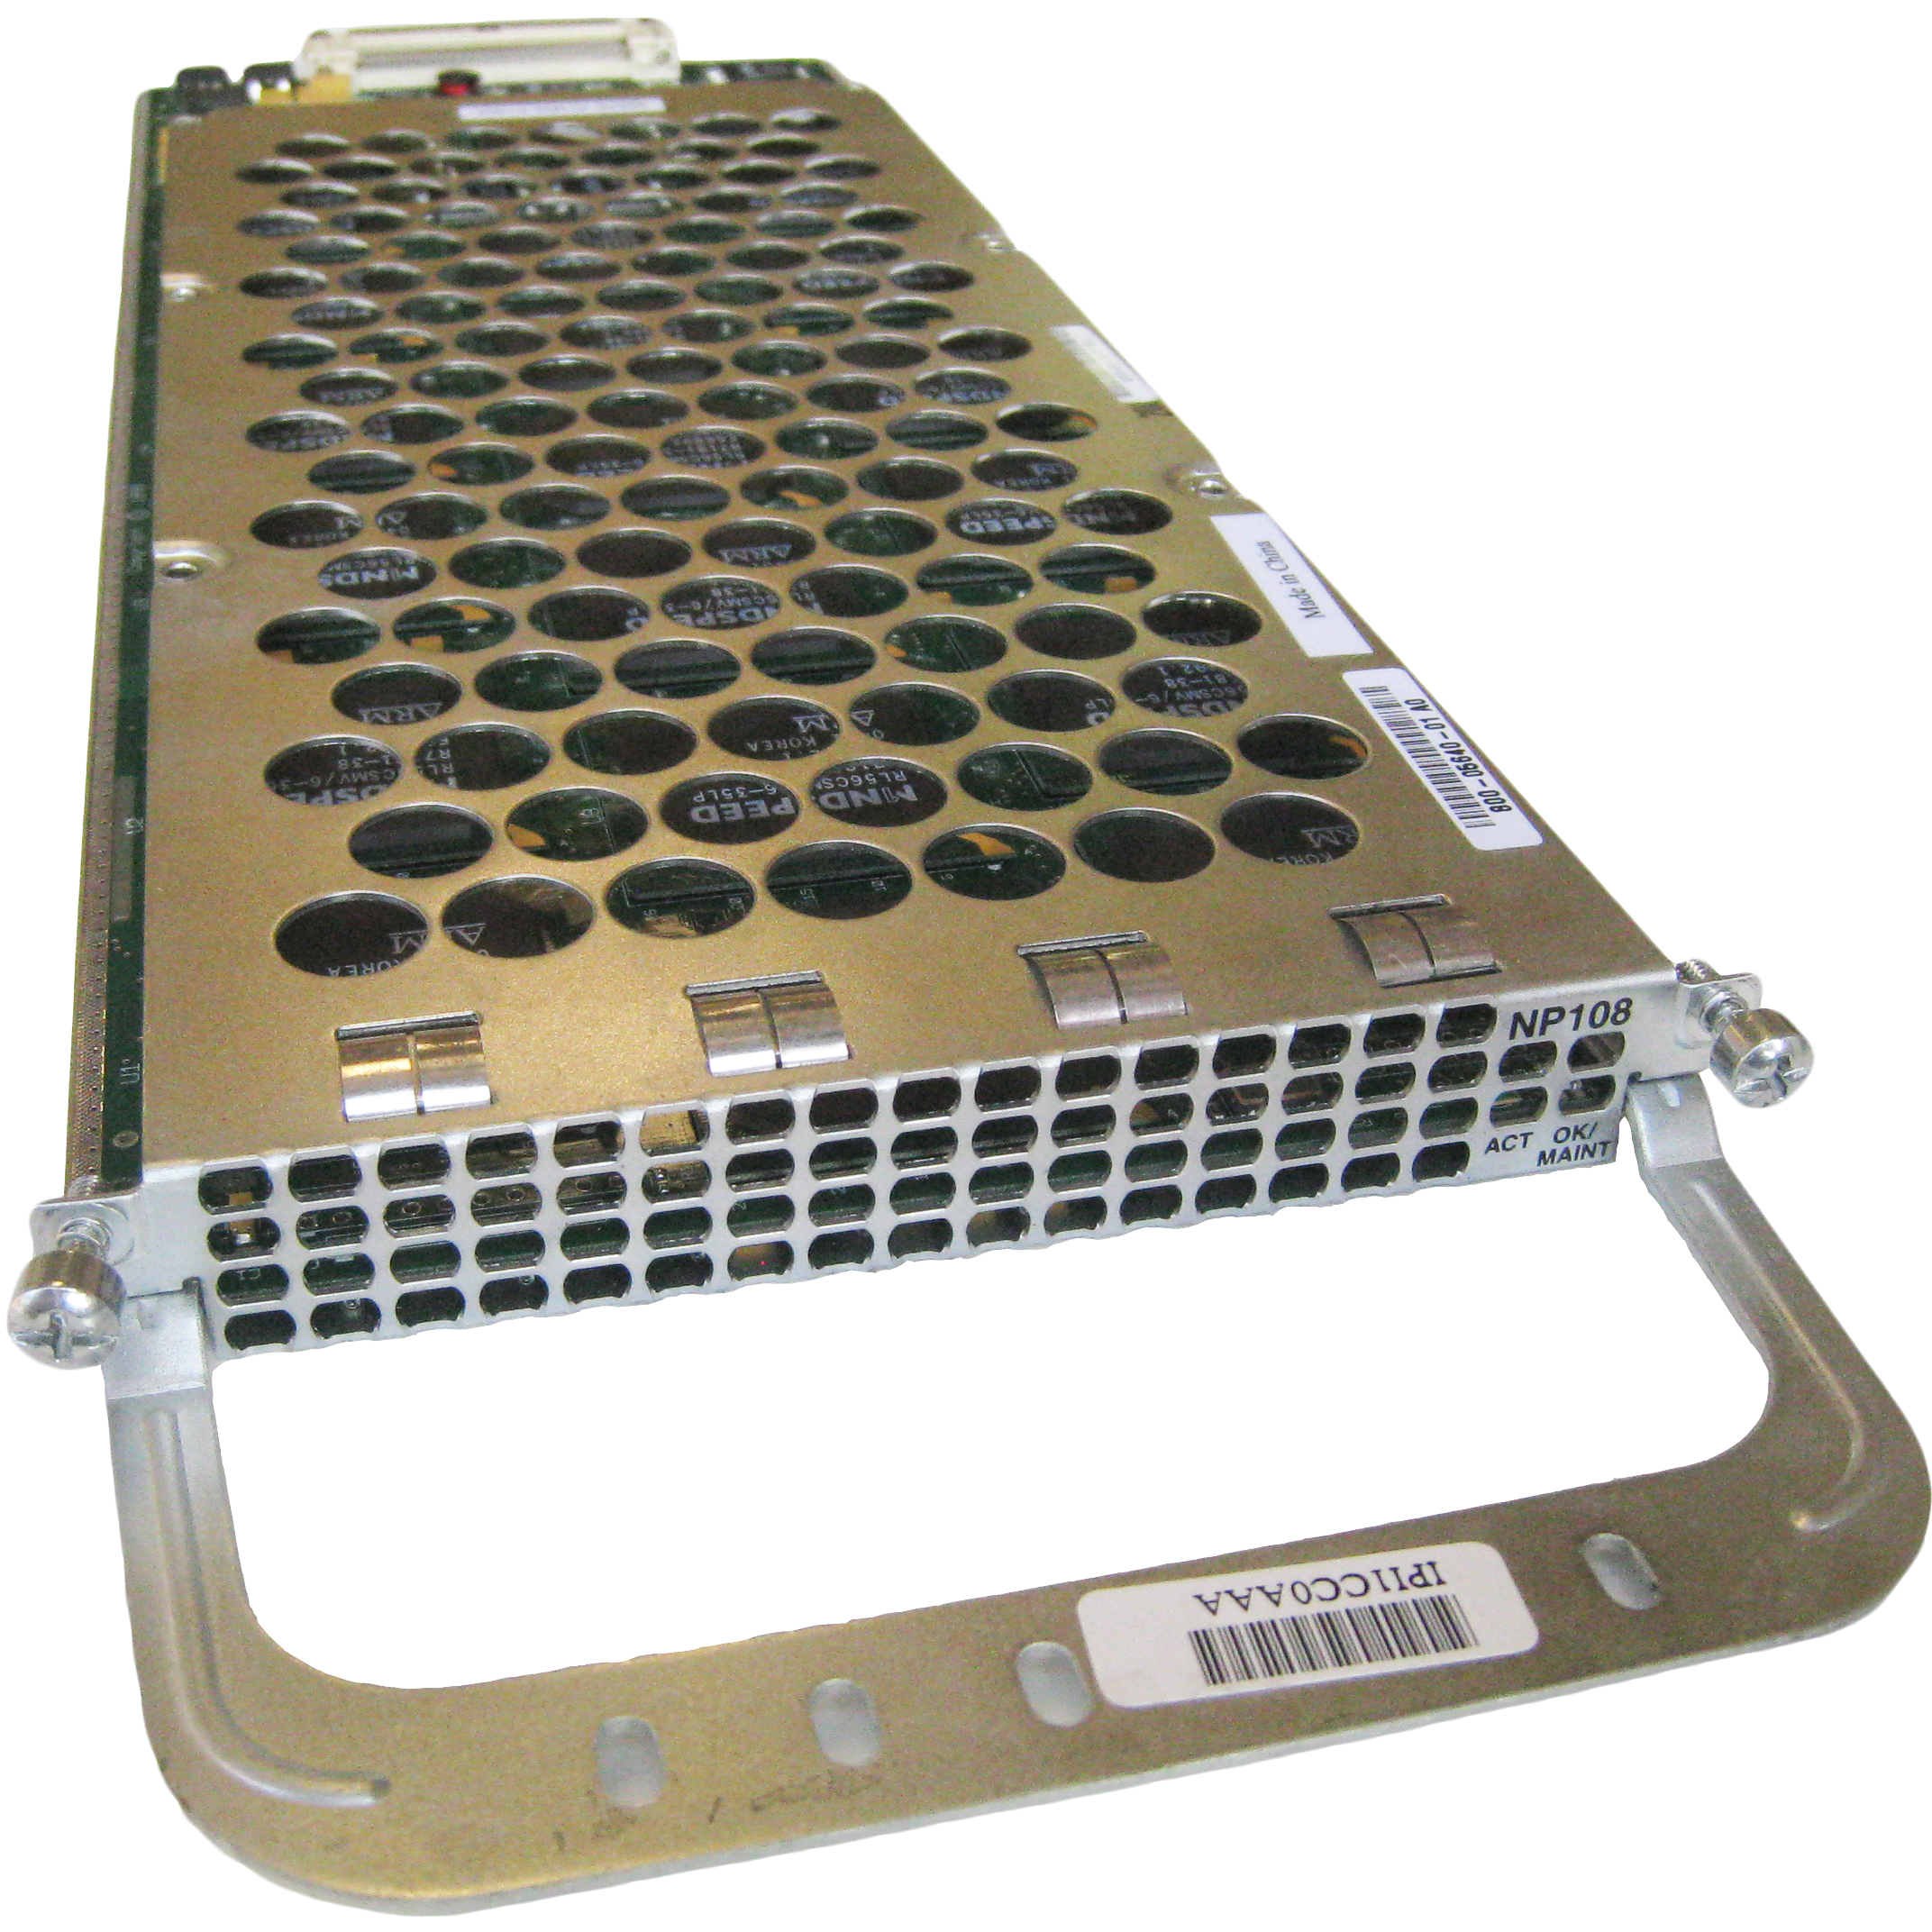 Cisco AS54-DFC-108NP